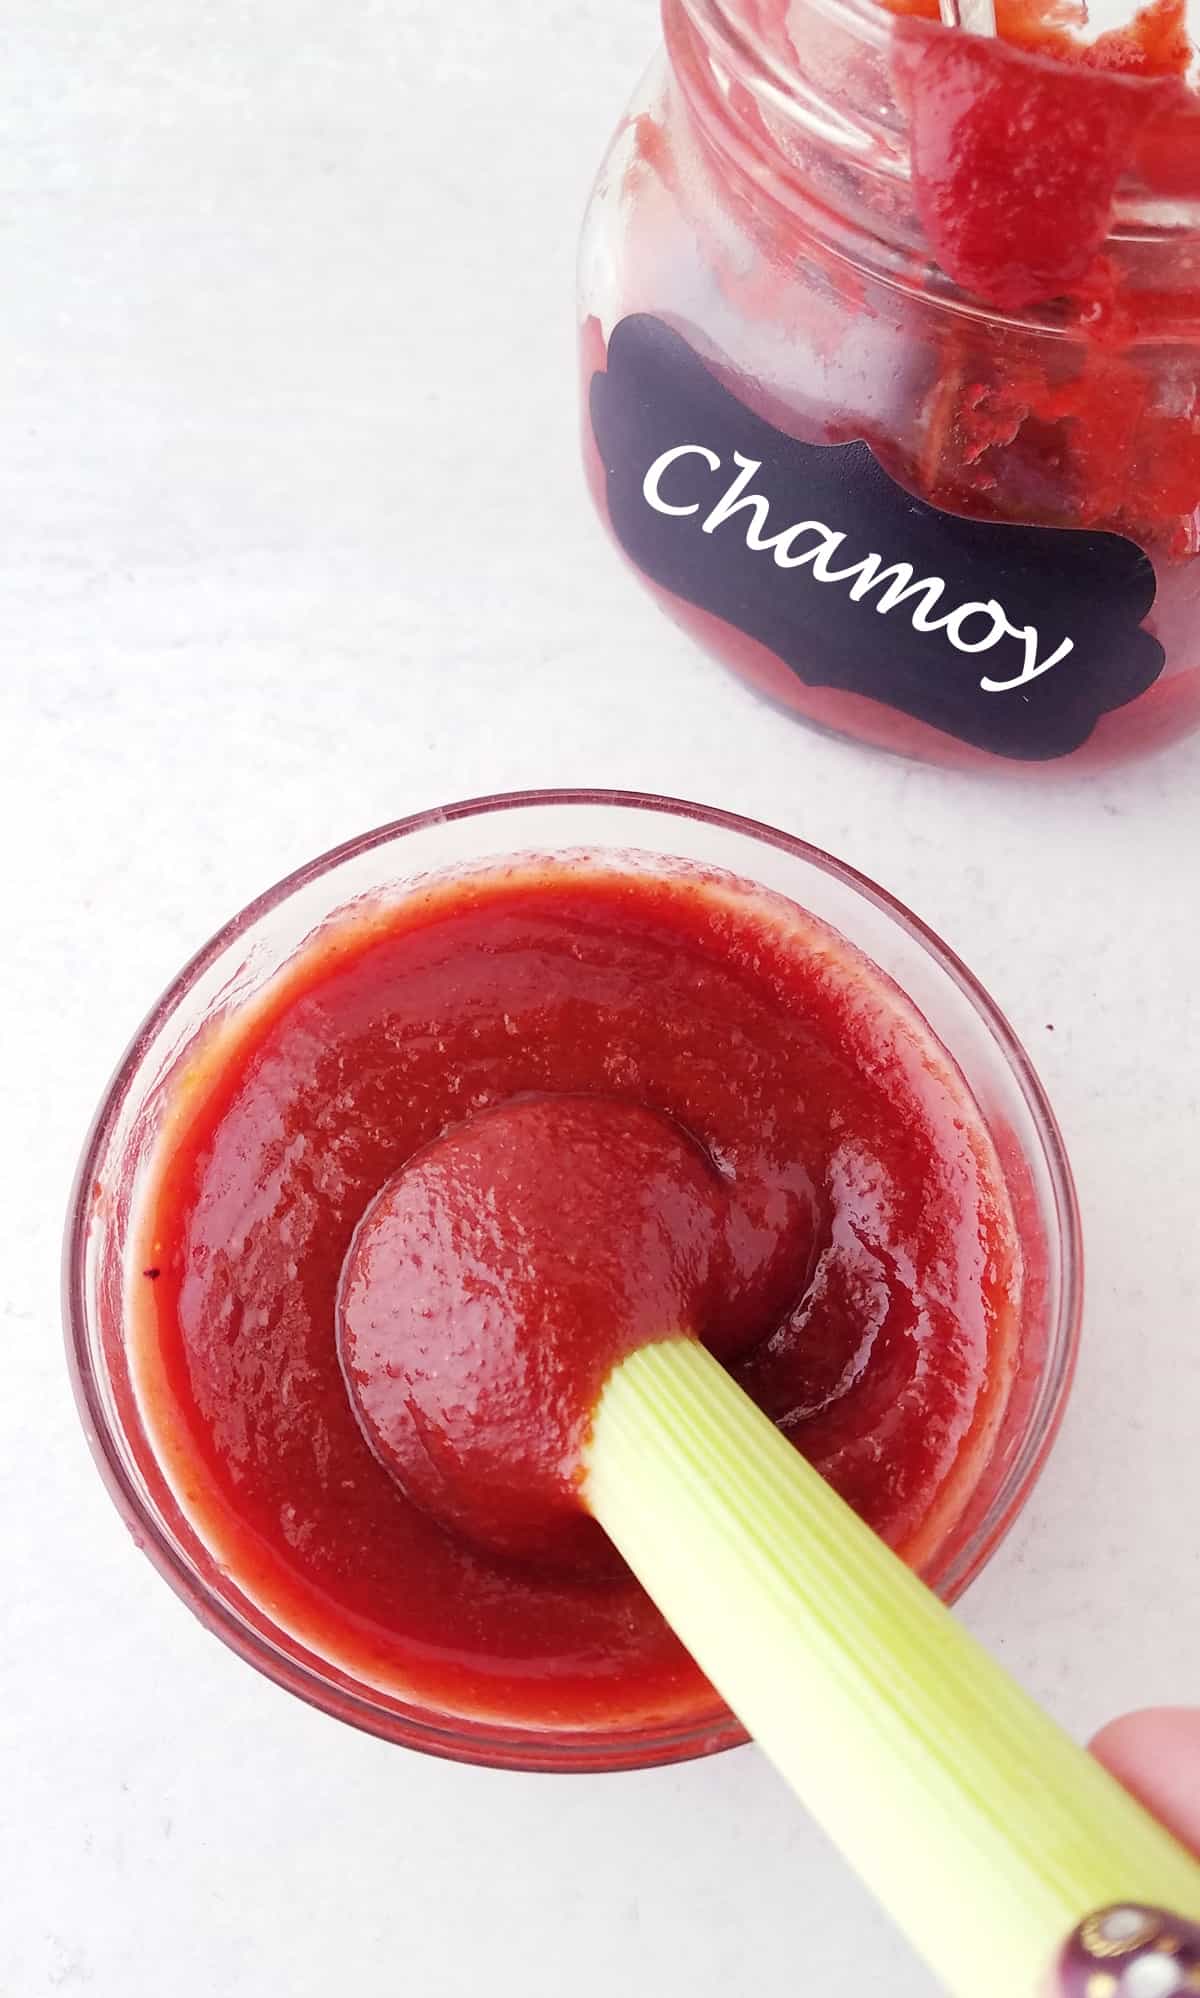 Chamoy Sauce - Easy and Delish